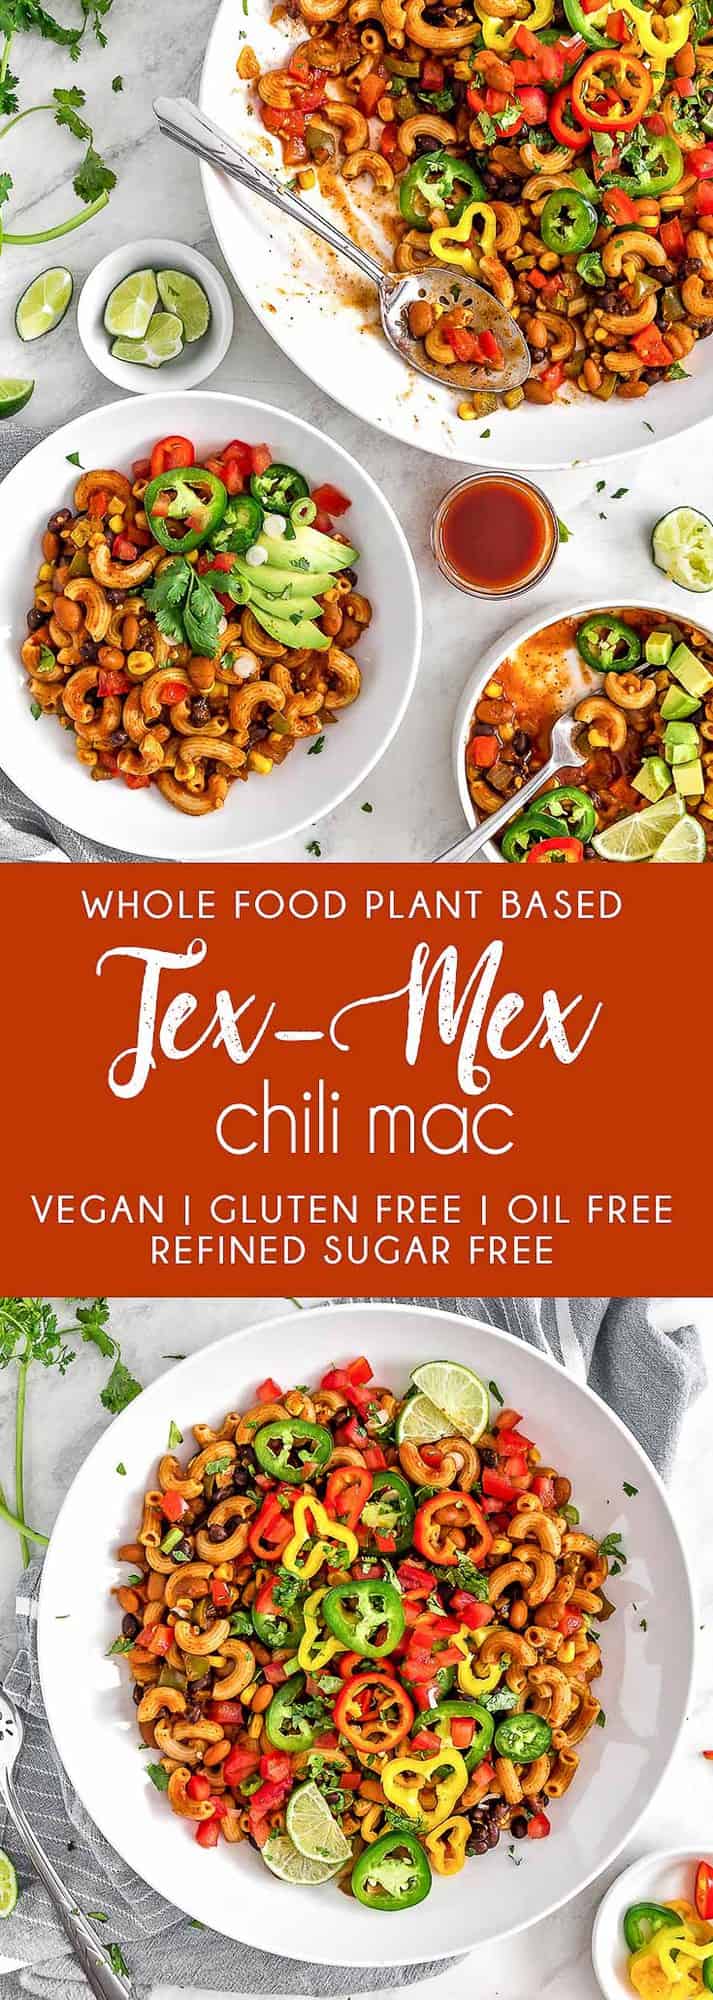 Tex-Mex Chili Mac, Vegan chili mac, vegan dinner, chili, mac, chili mac, tex-mex, southwestern, plant based dinner, plant based, vegan, vegetarian, whole food plant based, gluten free, recipe, wfpb, healthy, healthy vegan, oil free, no refined sugar, no oil, refined sugar free, dairy free, dairy, dinner, lunch, healthy recipe, vegan meal